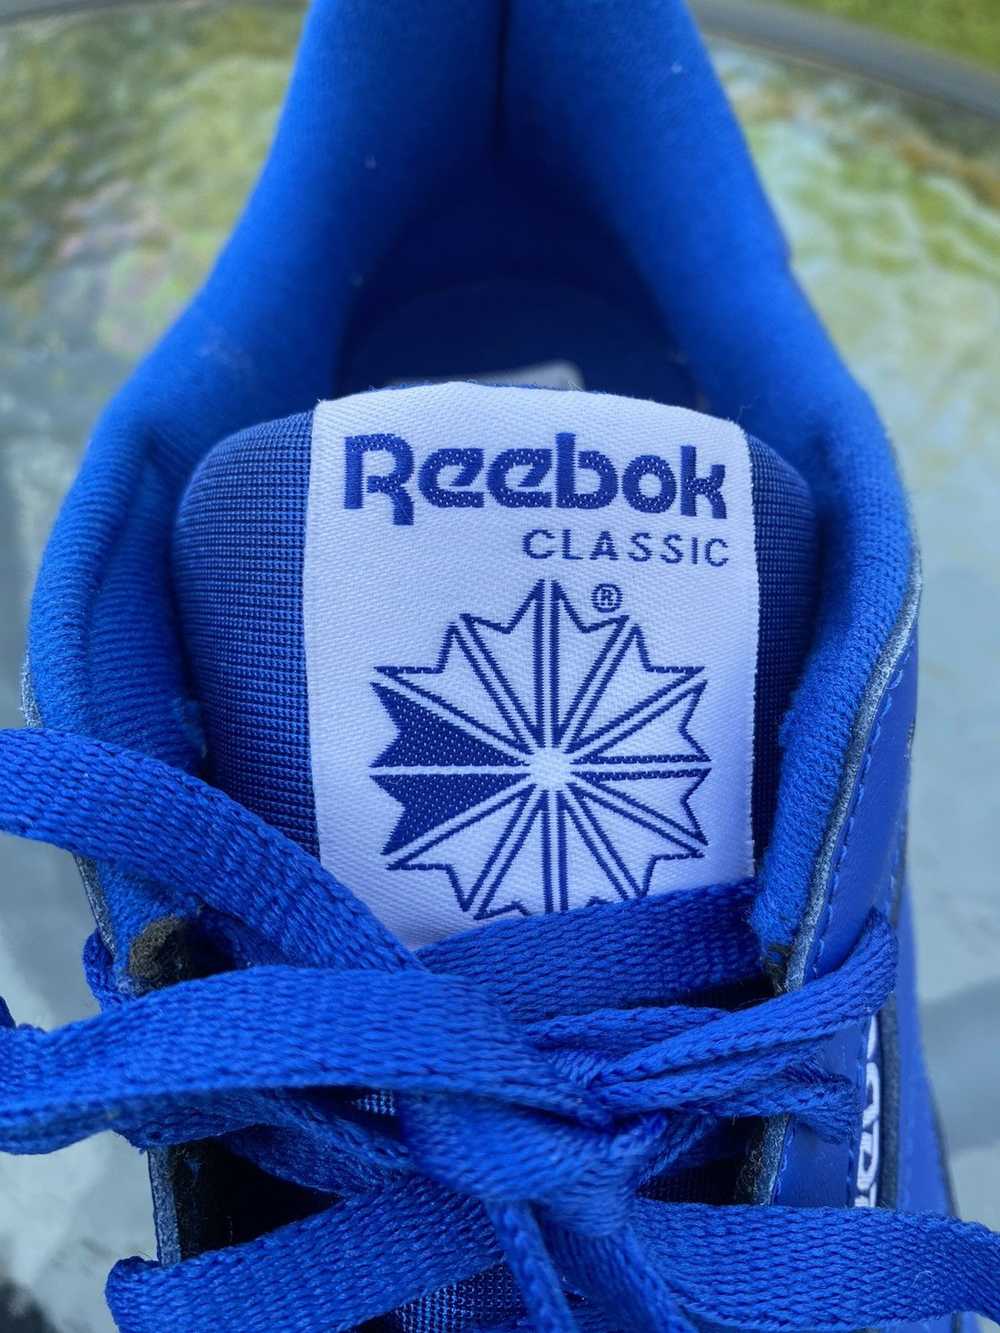 Reebok Reebok Classic Leather Shoes Royal Blue Wh… - image 3